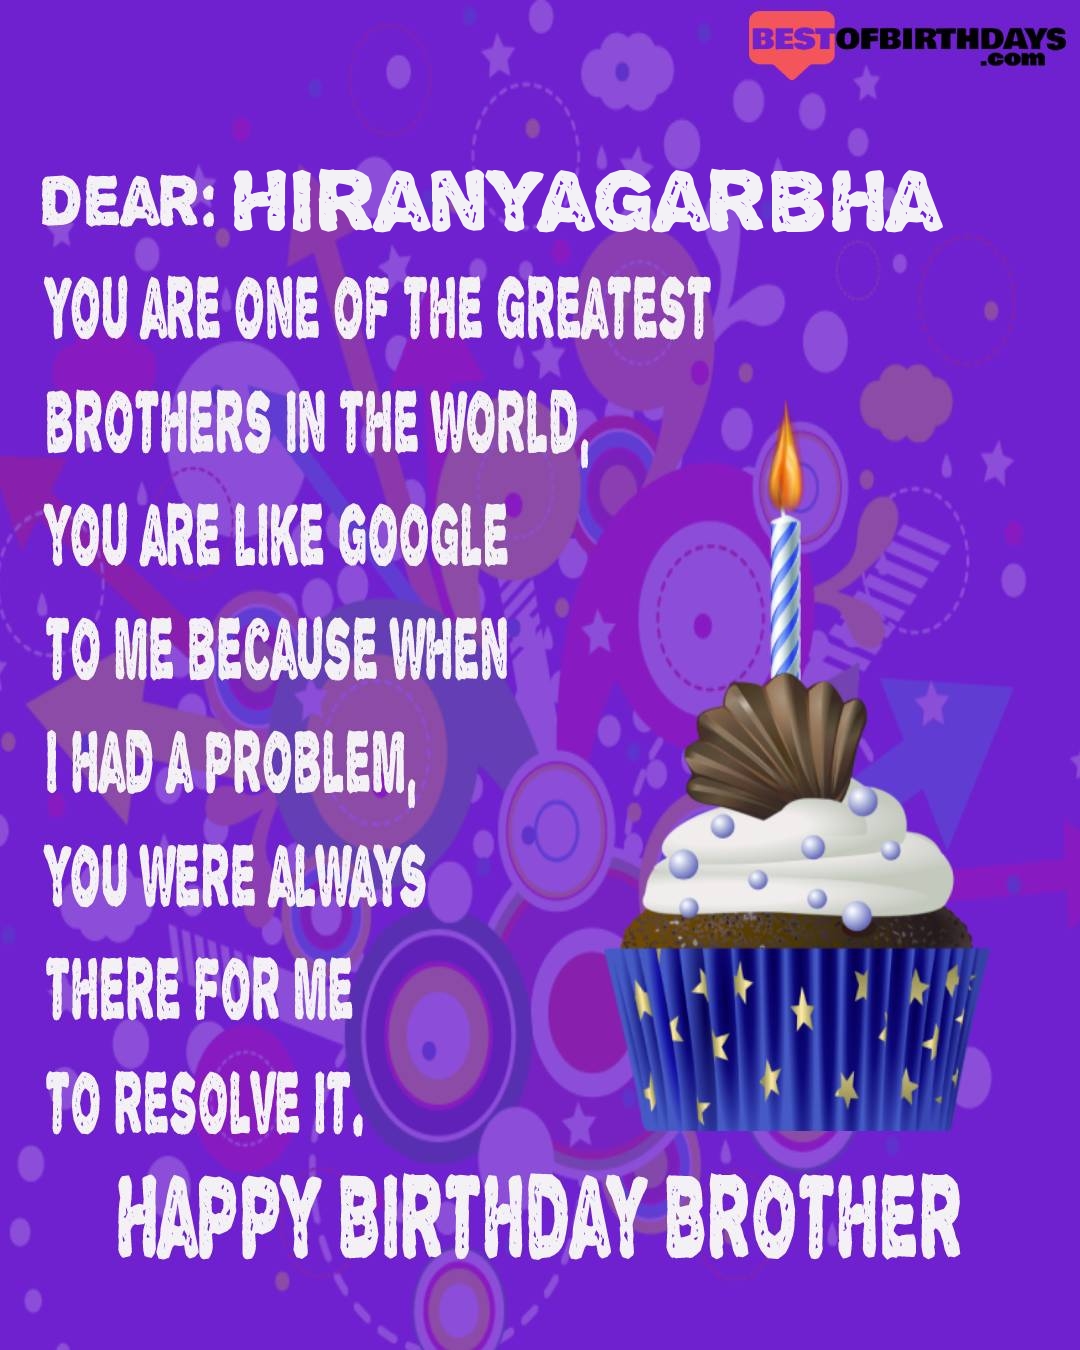 Happy birthday hiranyagarbha bhai brother bro